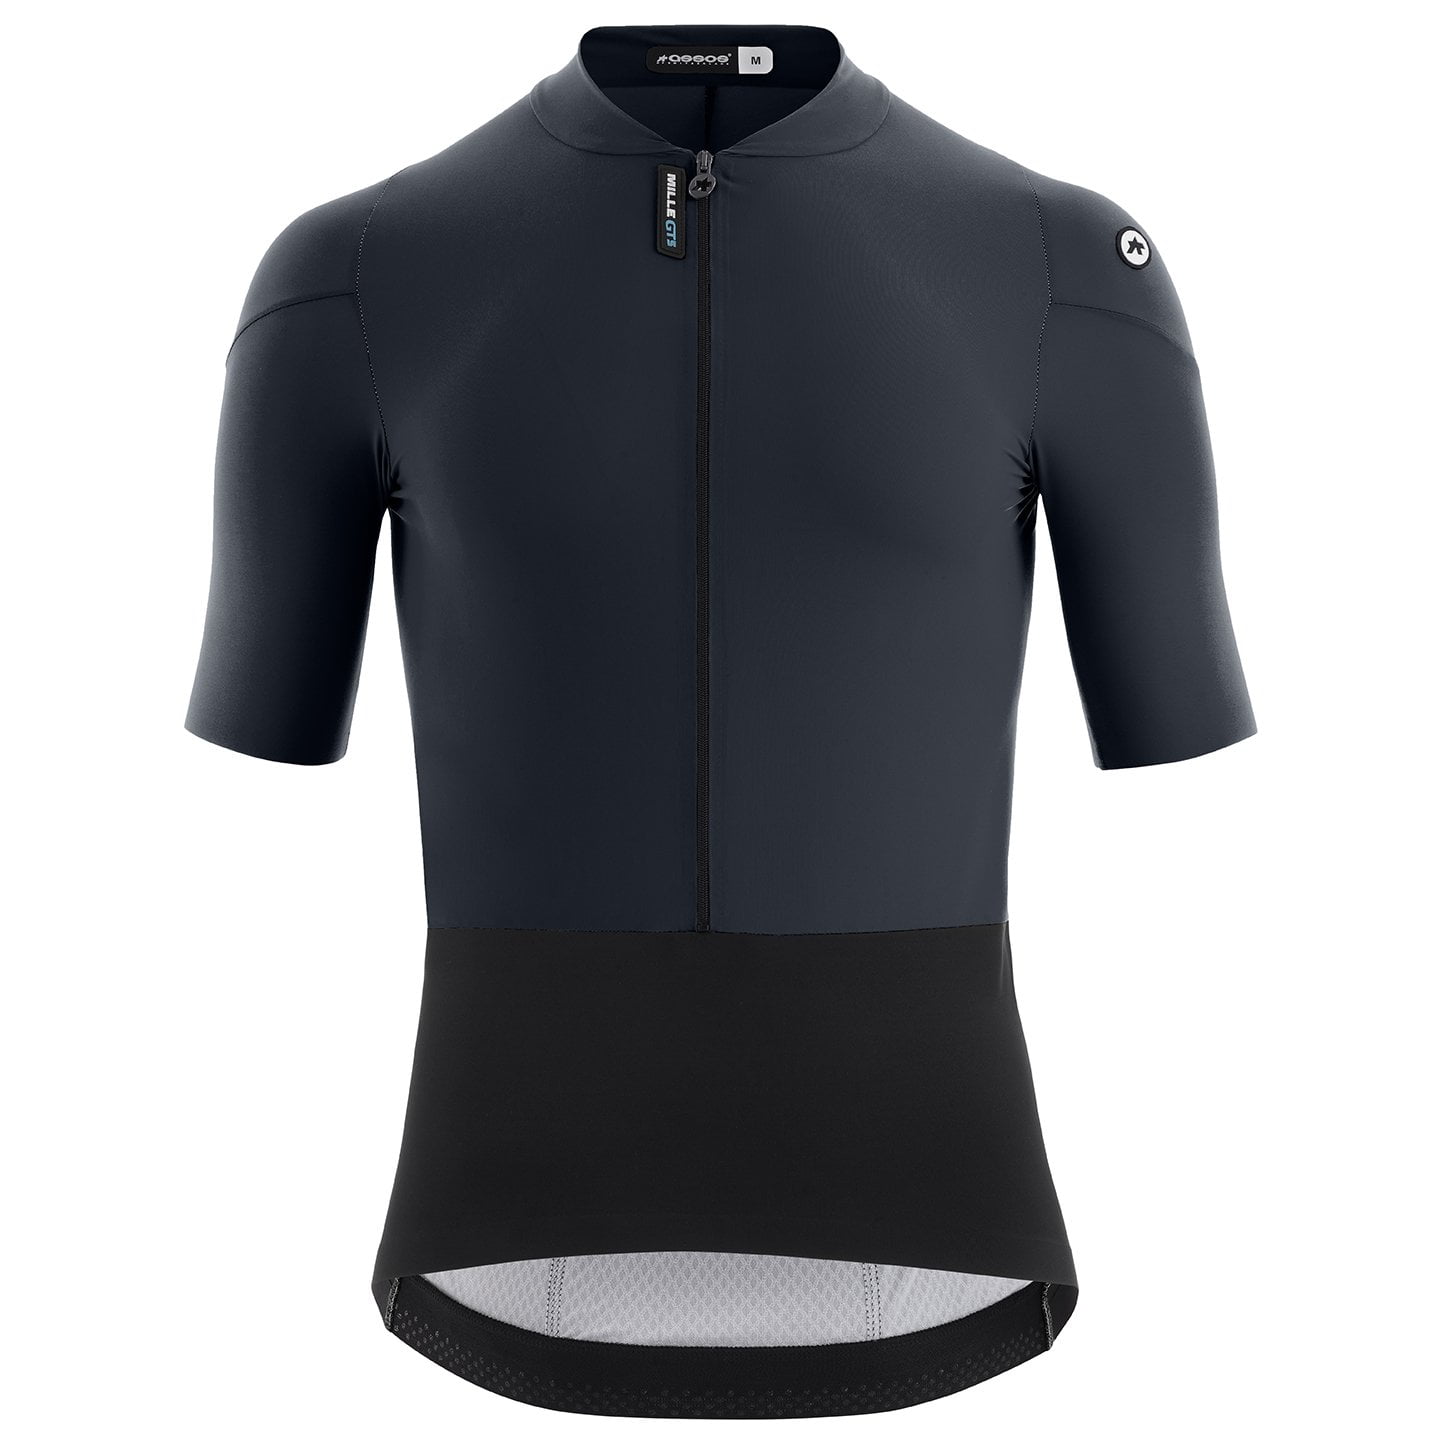 ASSOS Mille GTS C2 Short Sleeve Jersey Short Sleeve Jersey, for men, size L, Cycling jersey, Cycling clothing